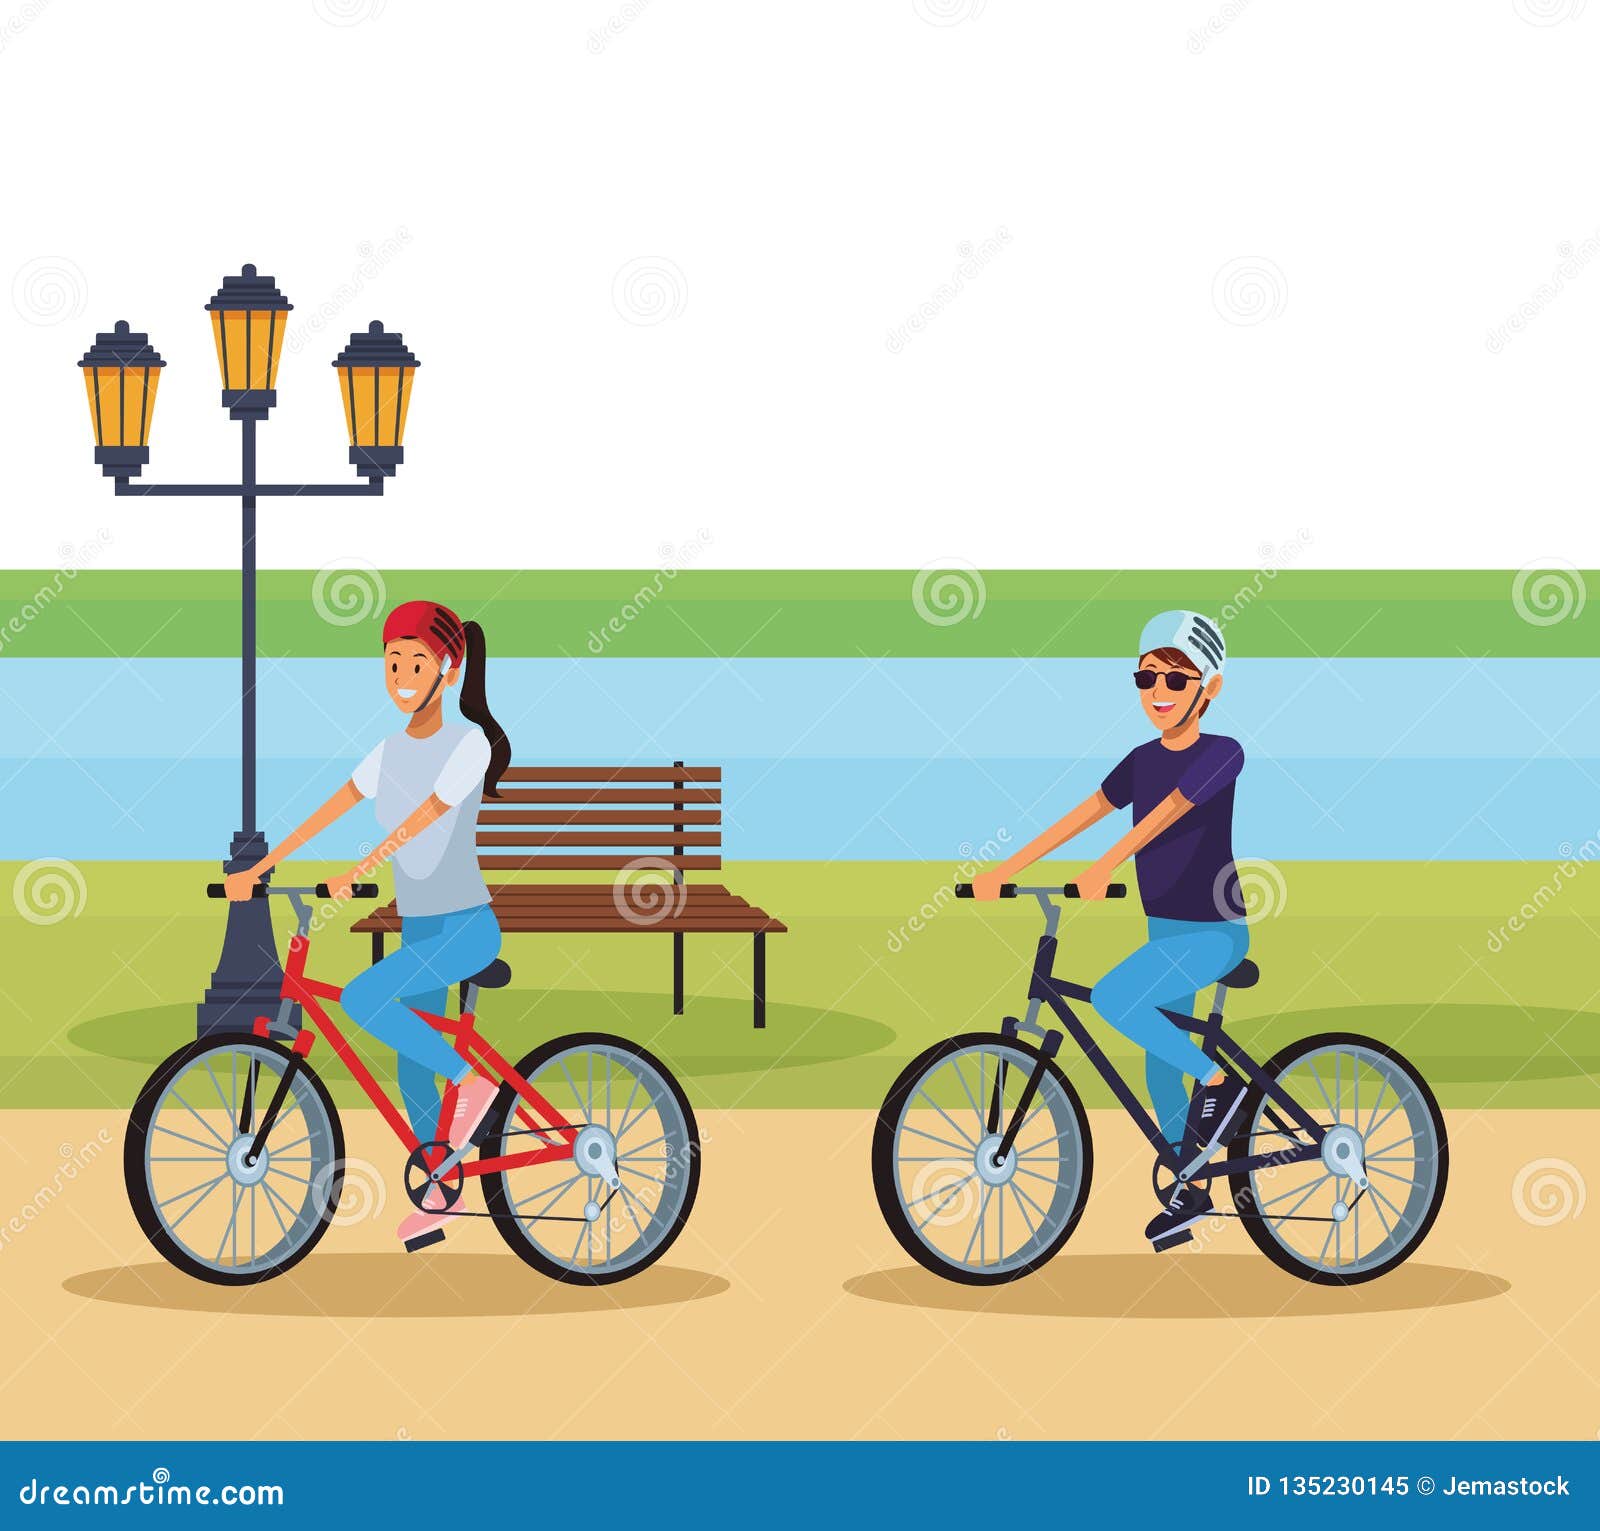 woman riding bicicle